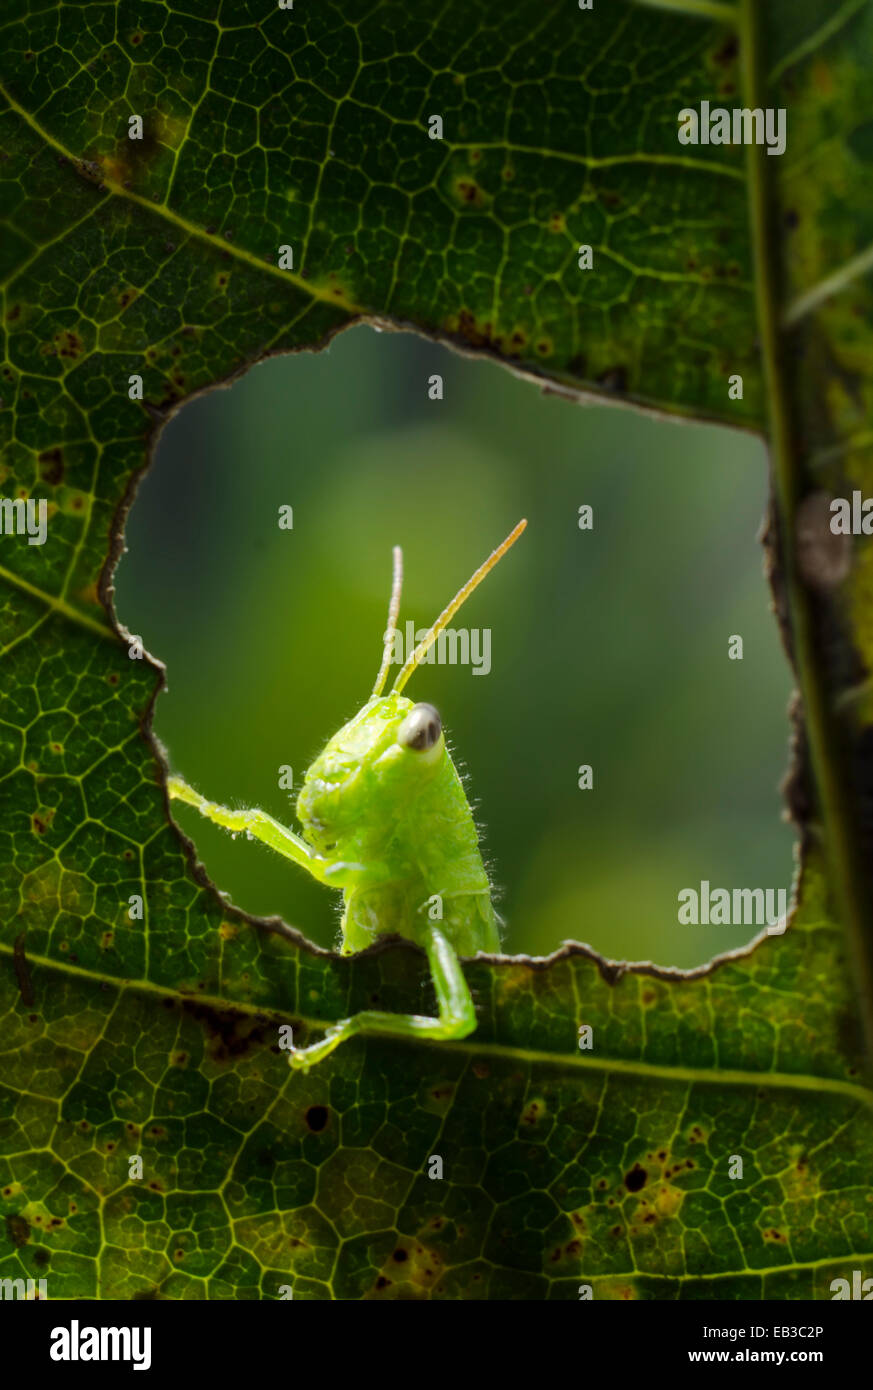 Indonesia, Gorontalo, Grasshopper on leaf Stock Photo